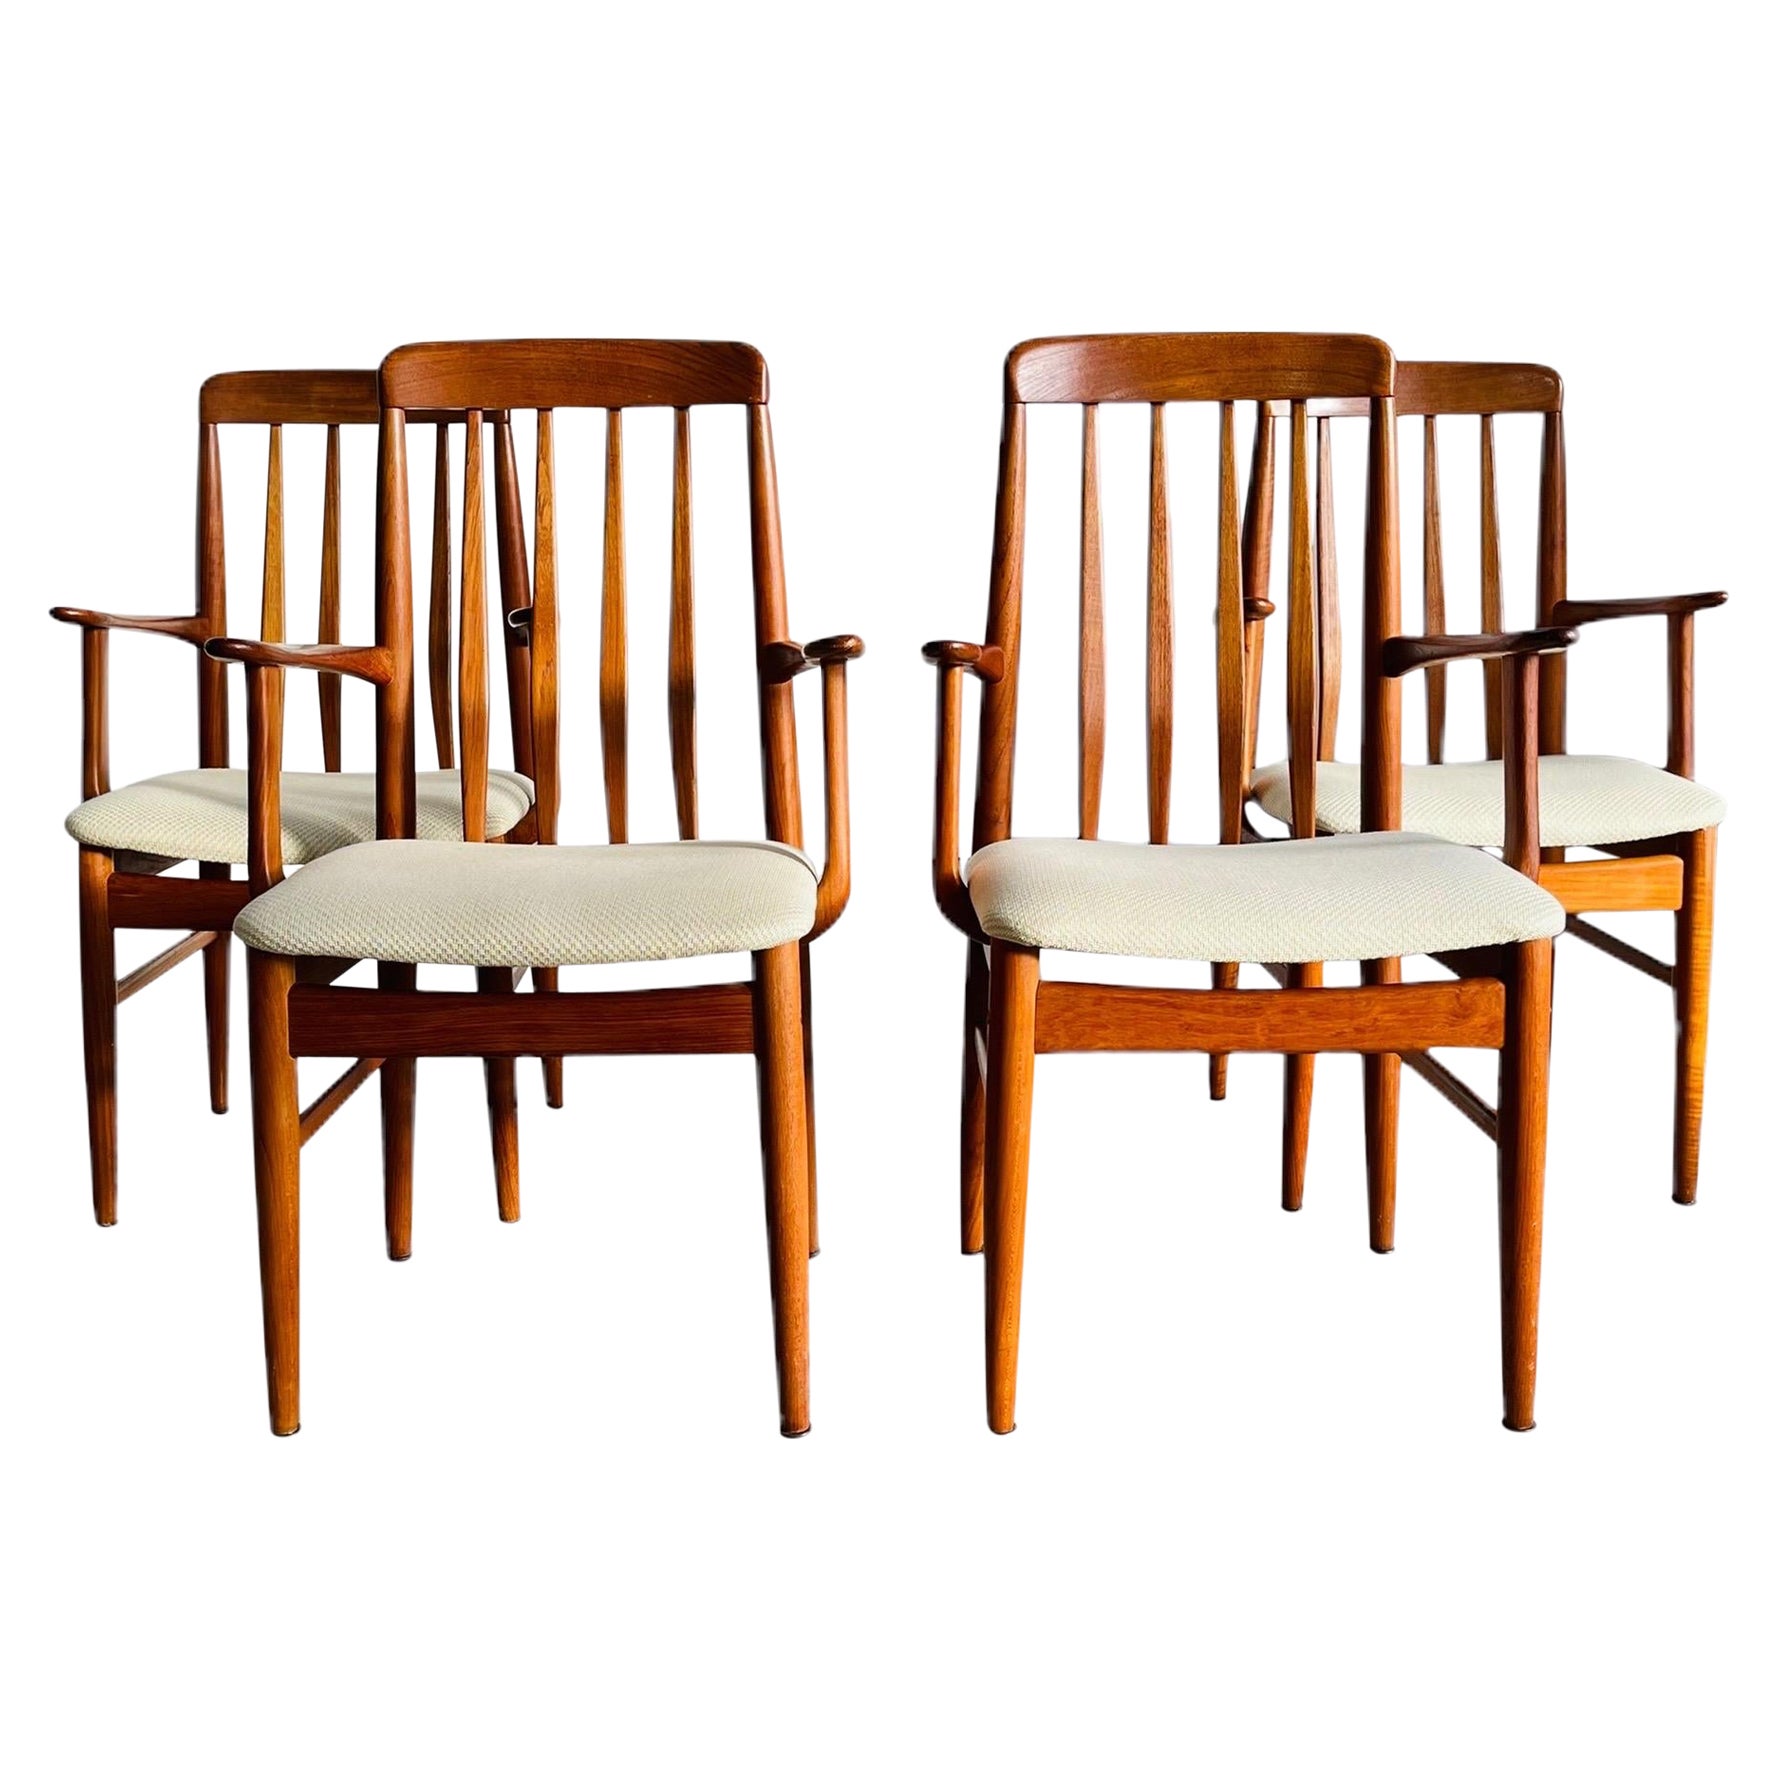 Set 4 1970s Benny Linden Teak Dining Chairs